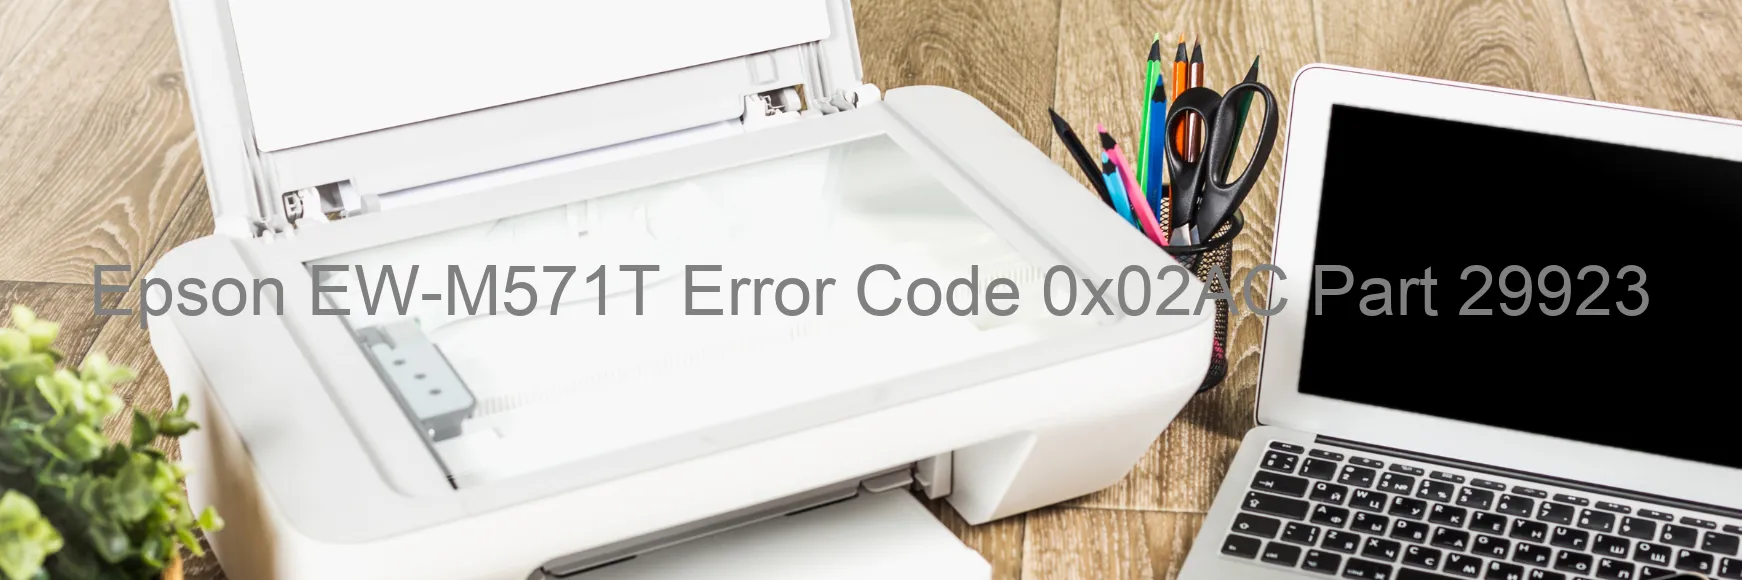 Epson EW-M571T Error Code 0x02AC Part 29923